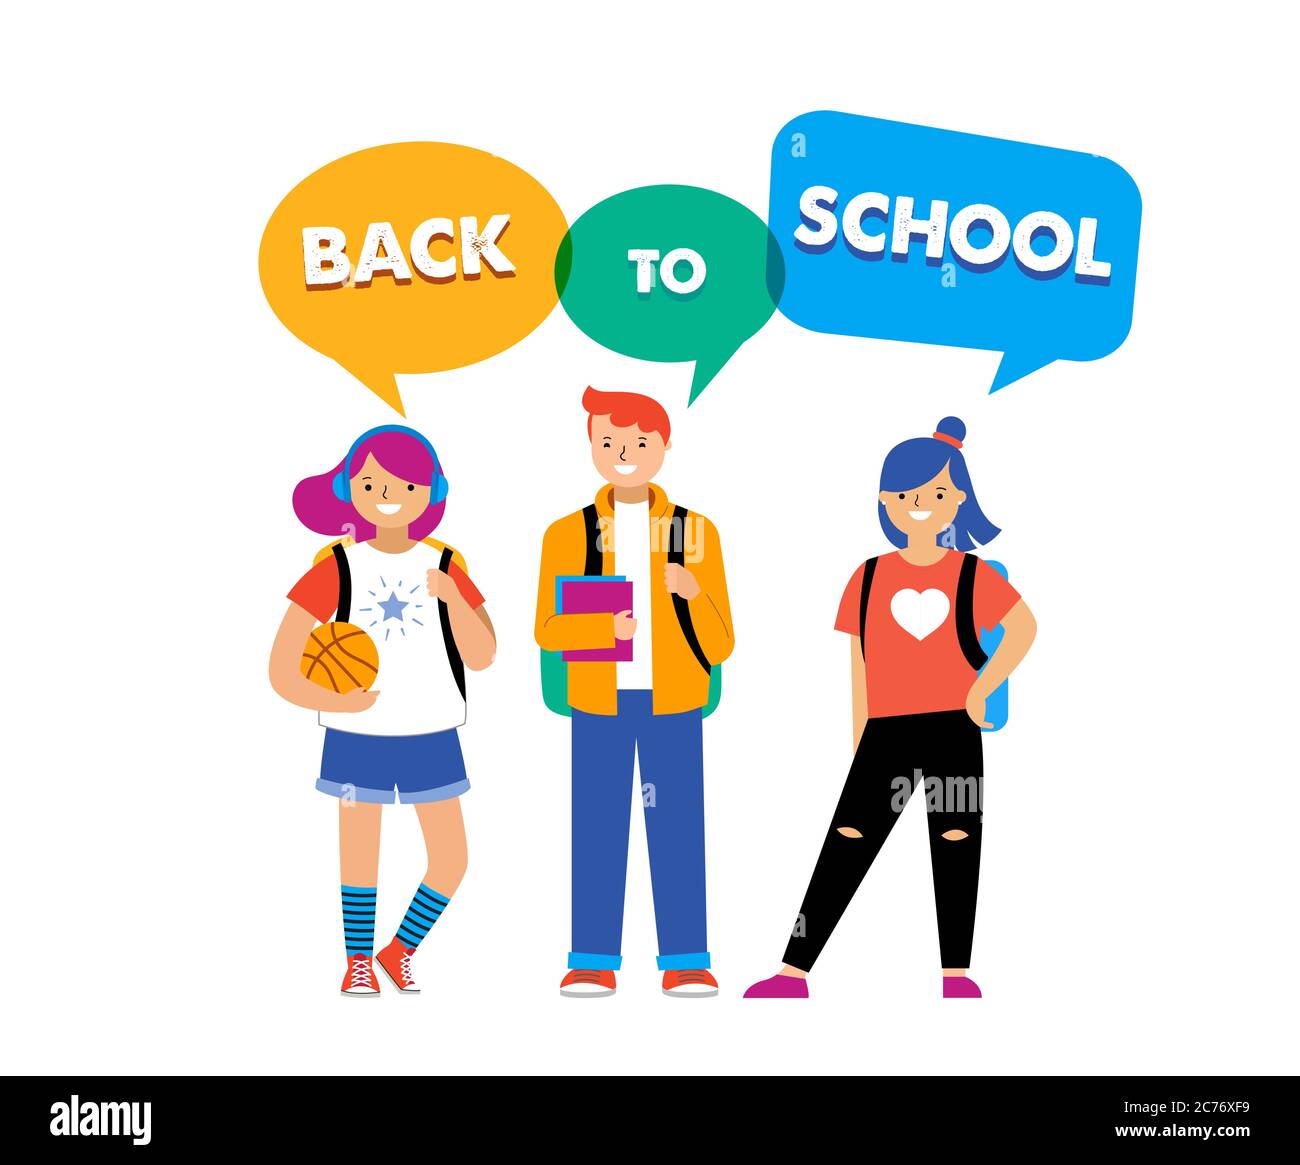 Back to school background, diversity concept for children - schoolboys and schoolgirls of different ethnicities standing together Stock Vector